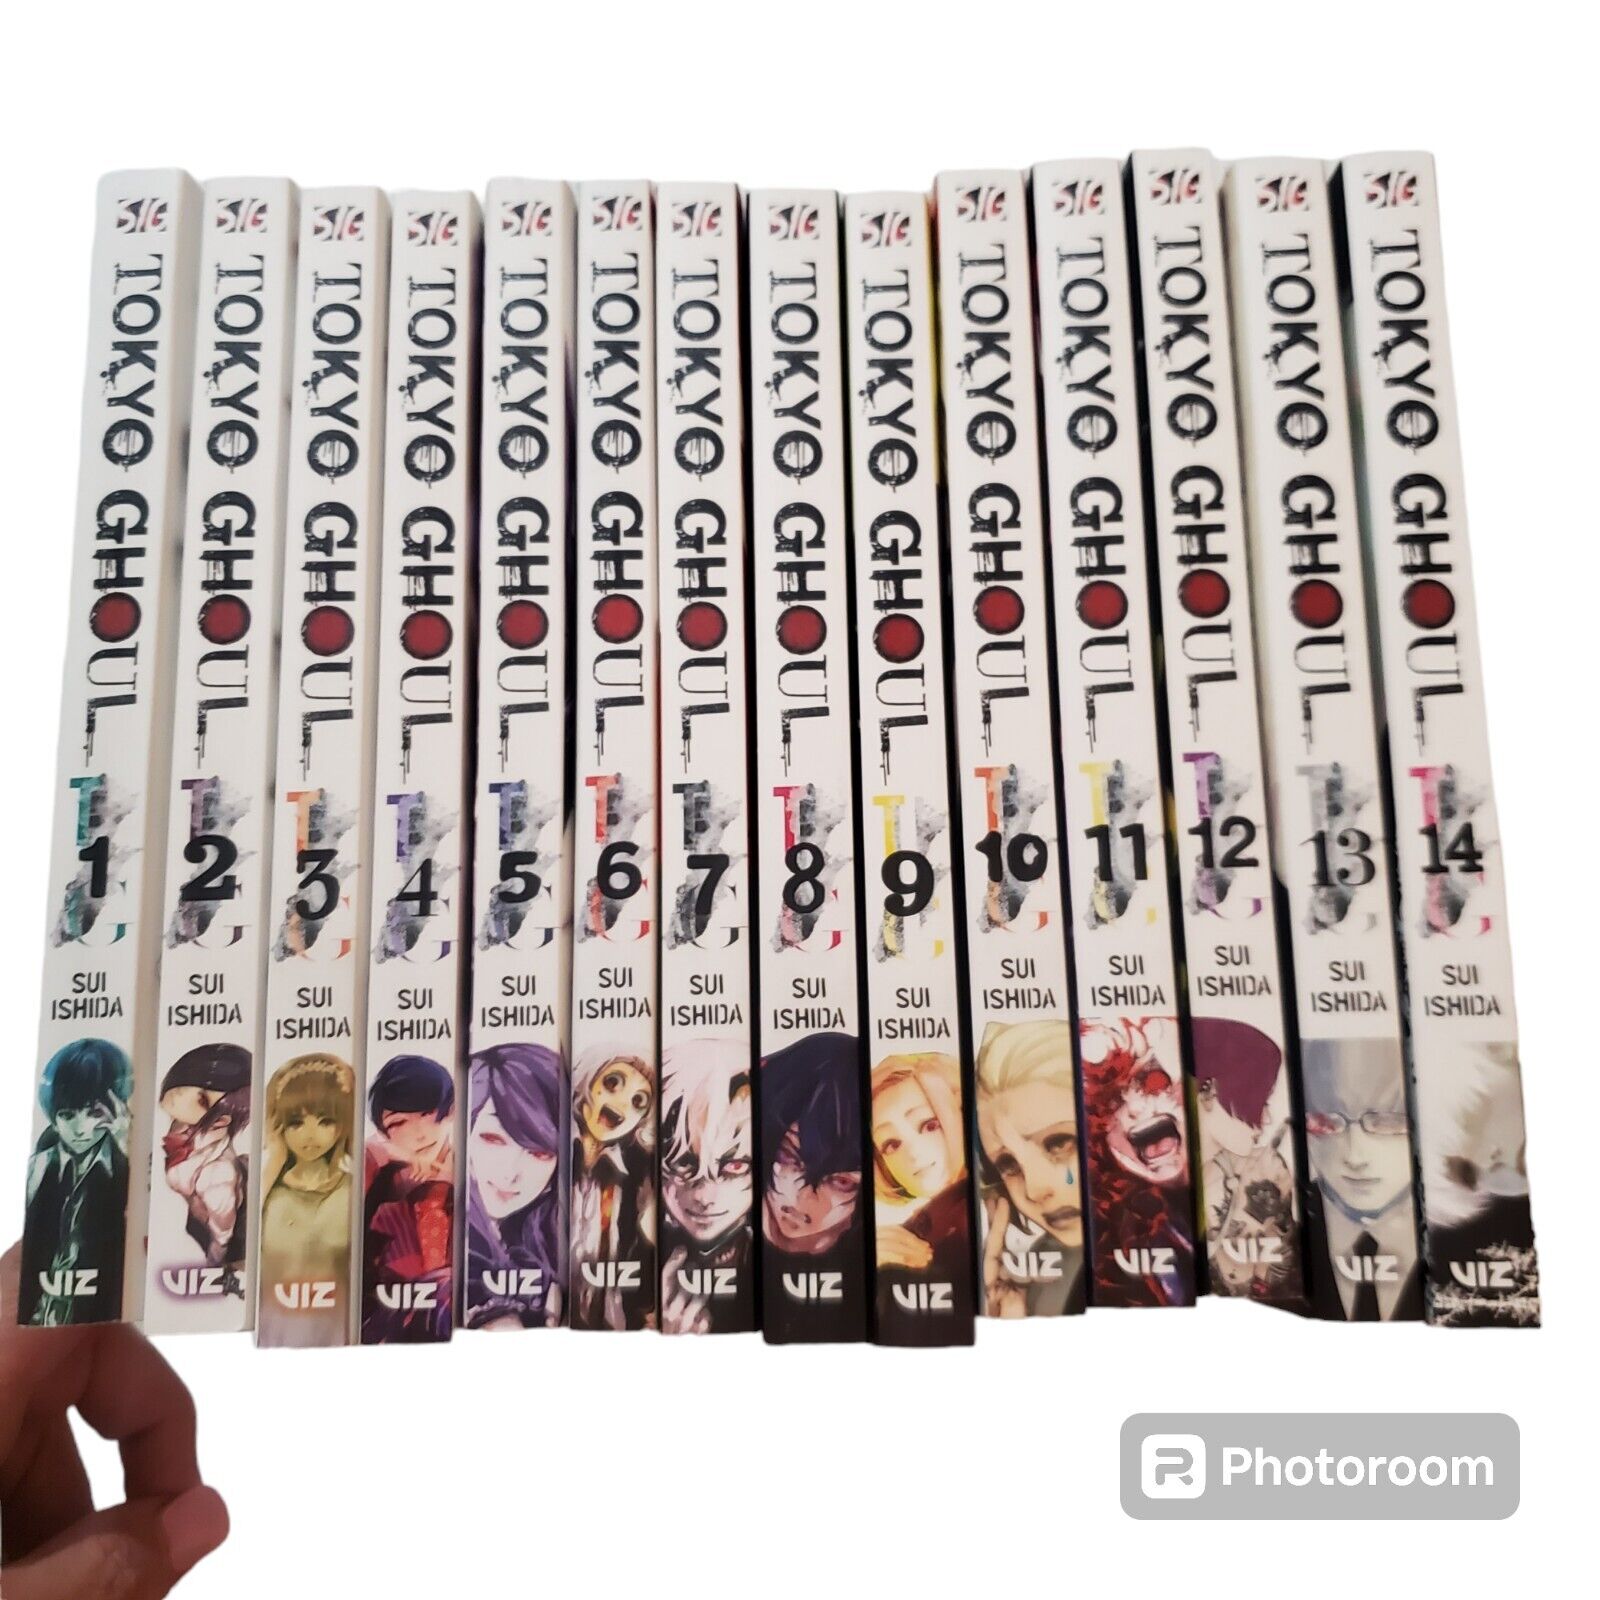 Tokyo Ghoul Manga Set, Volumes 1-14, English Complete Set Anime Comics 